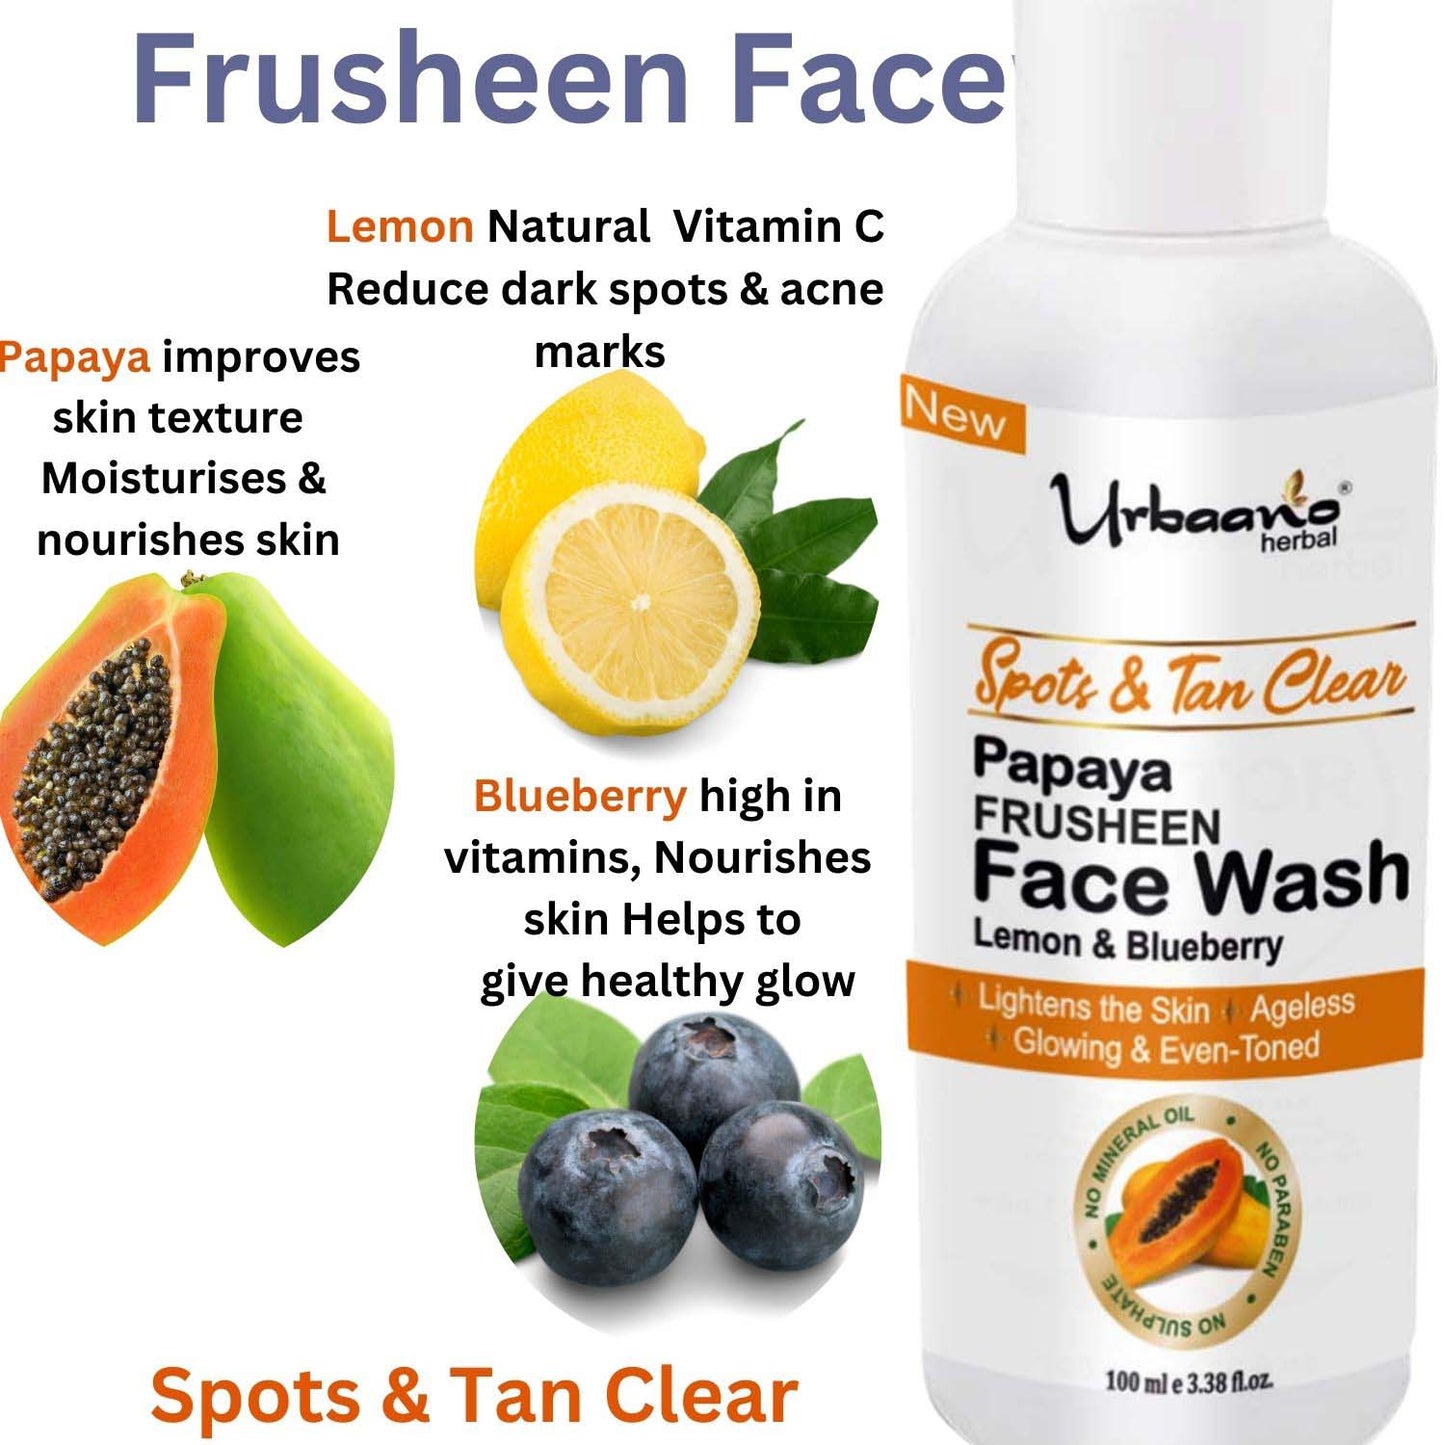 urbaano herbal spot & tan clear facewash with papaya, lemon, blueberry